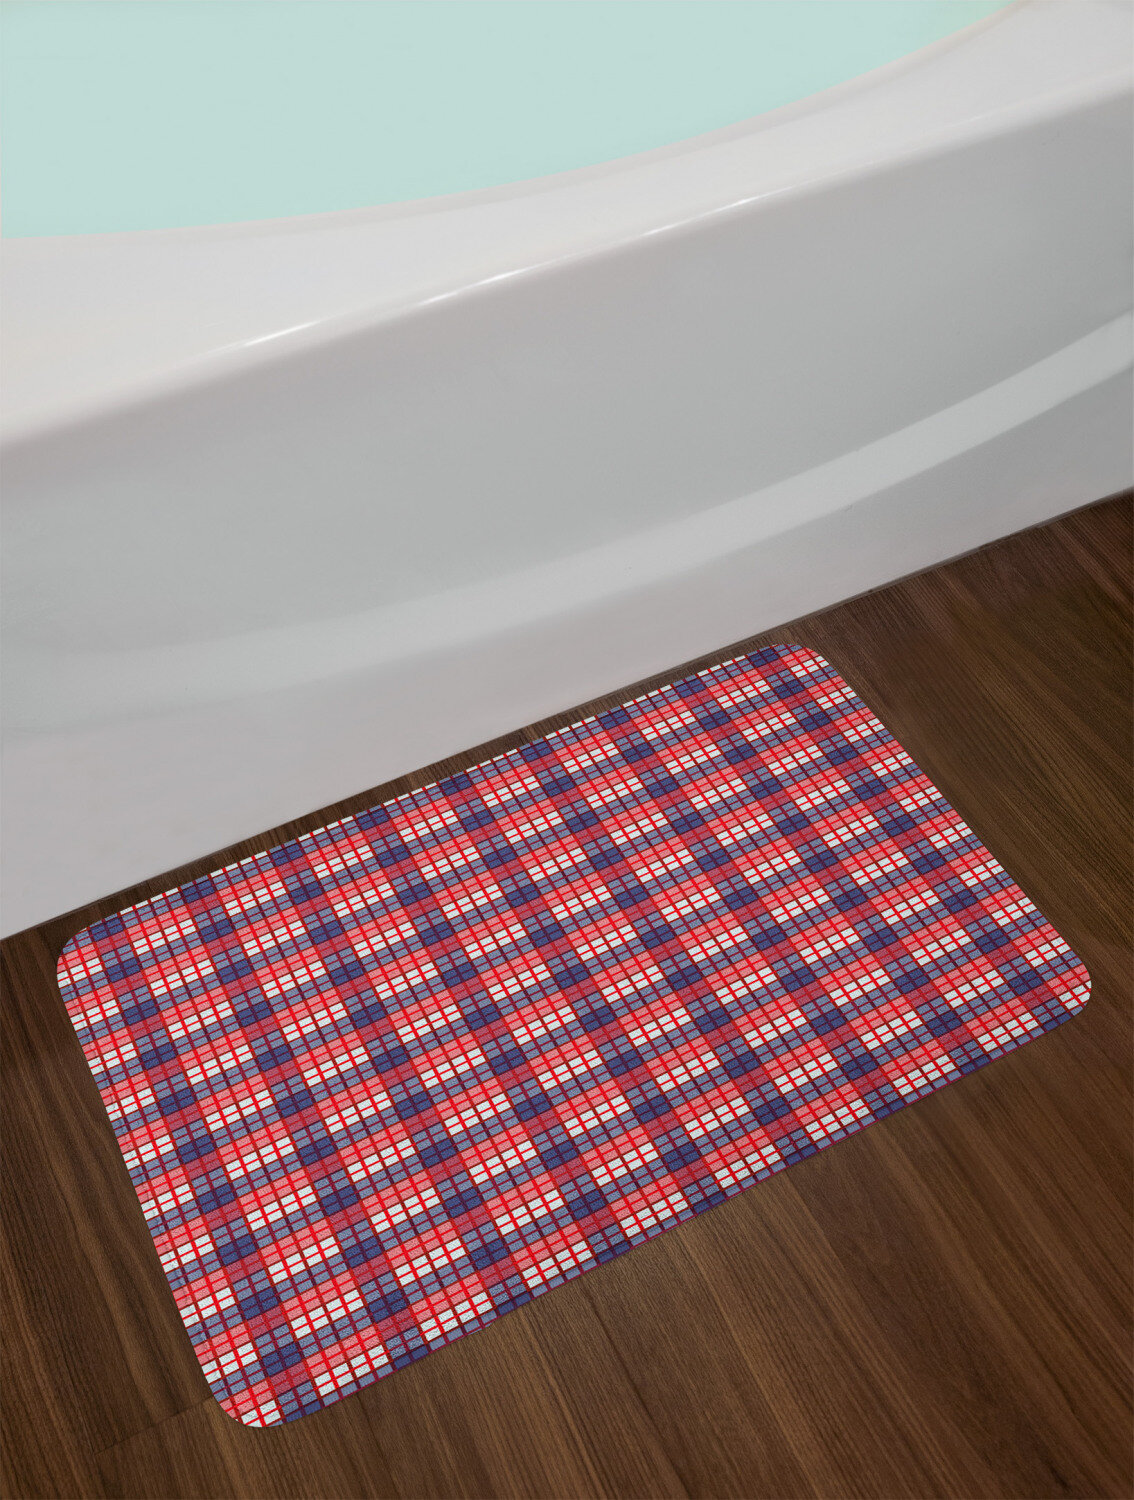 plush bathroom mats